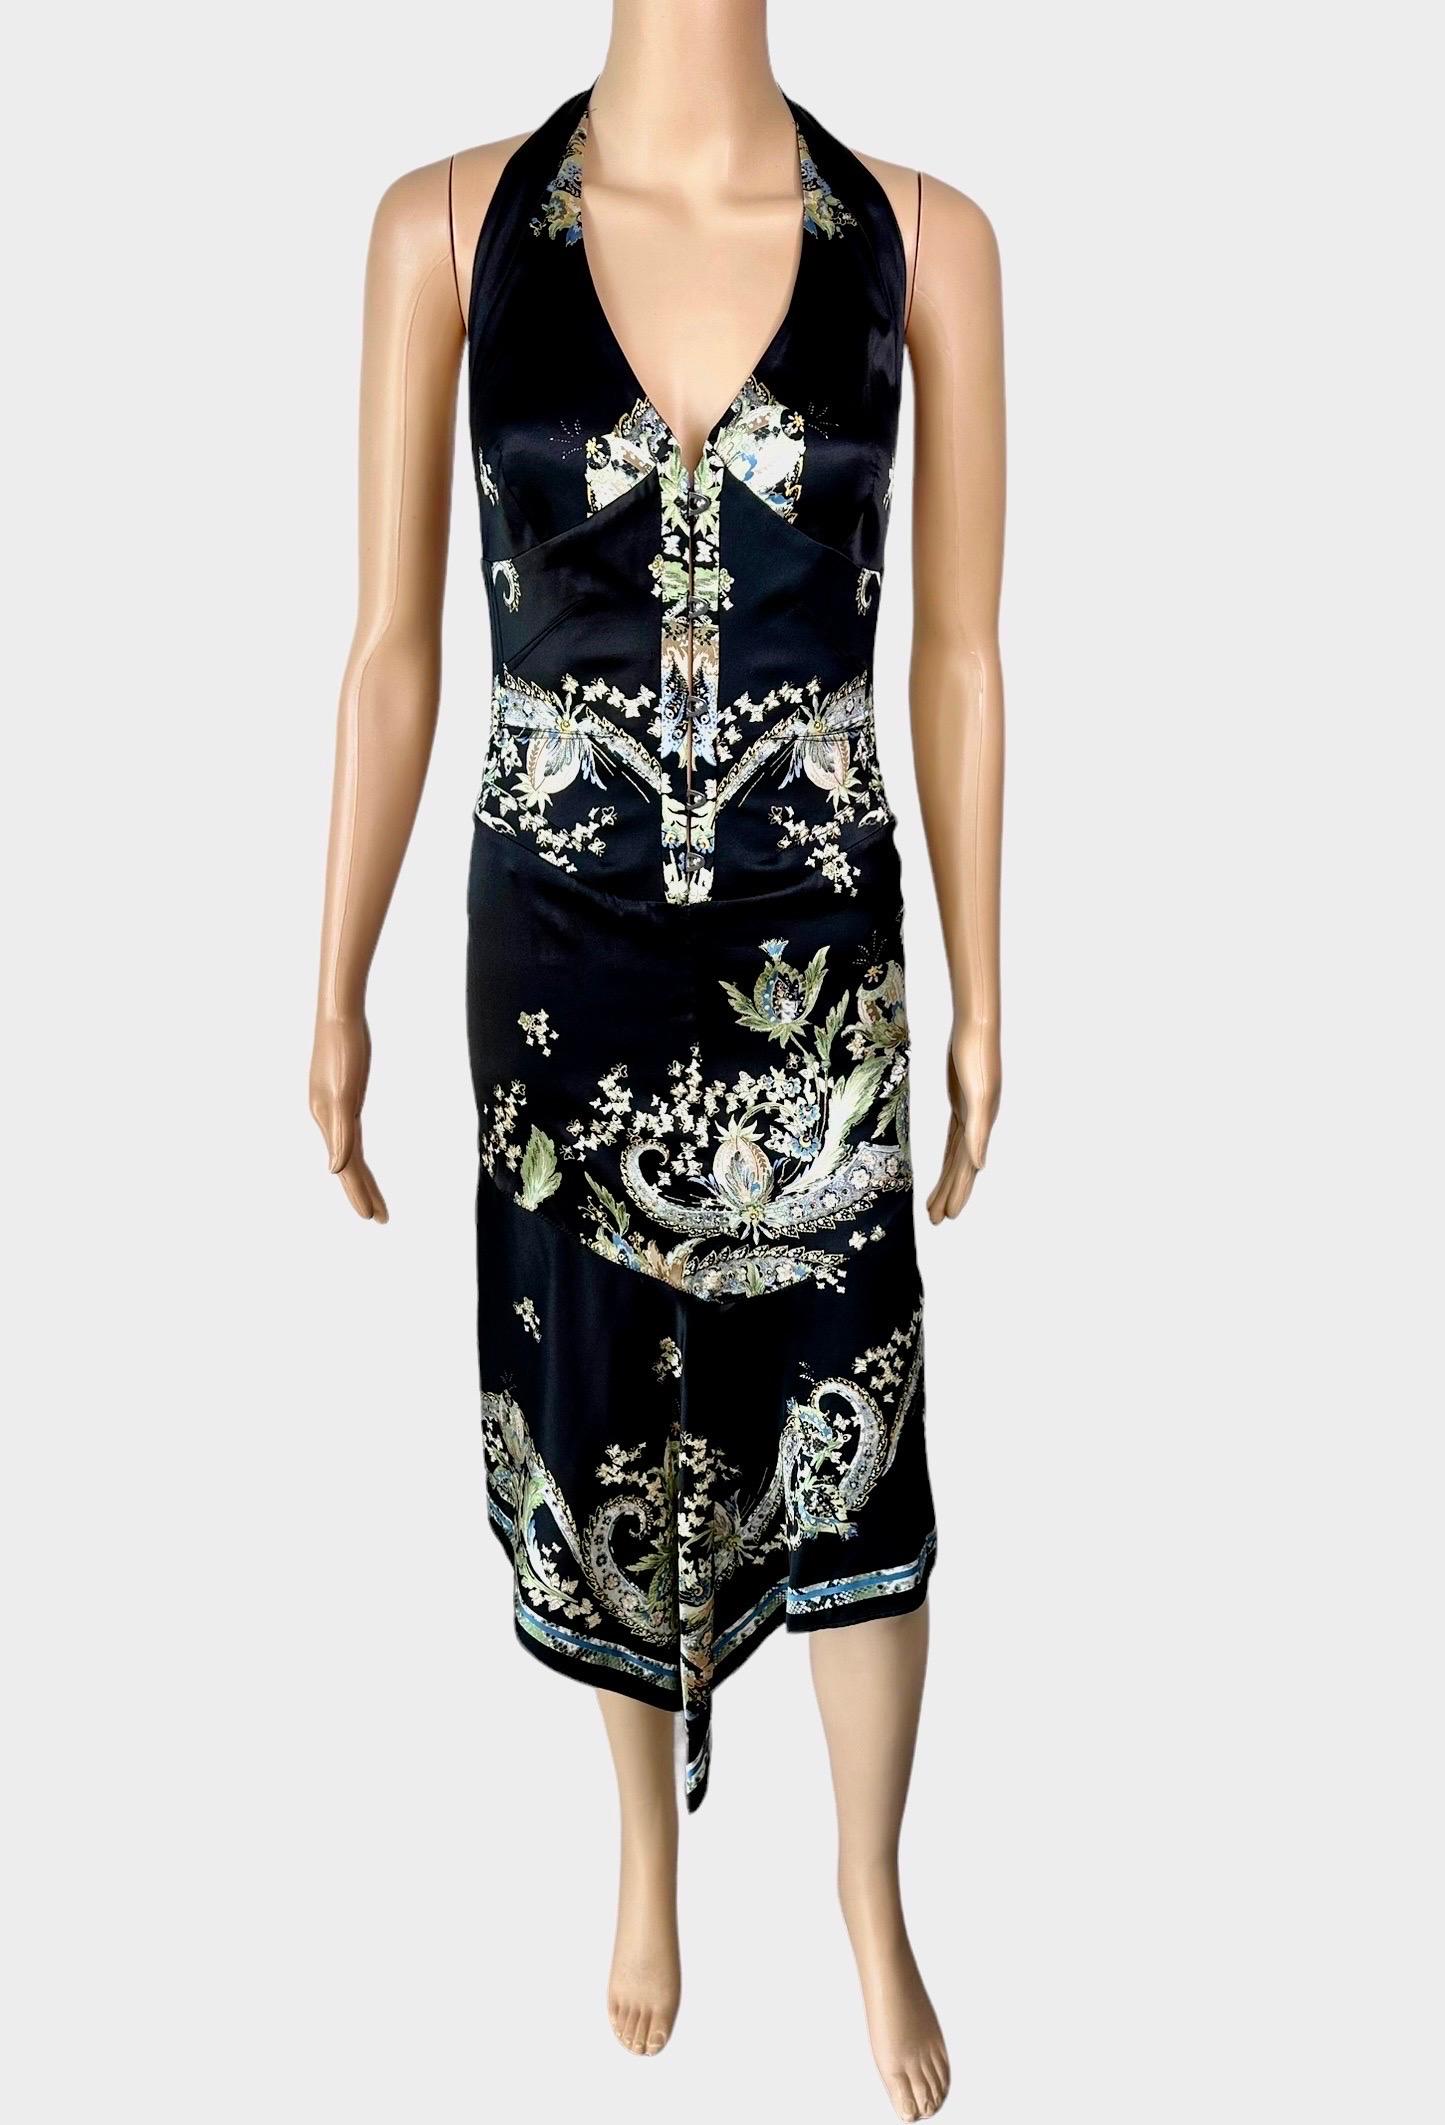 Roberto Cavalli S/S 2003 Corset Lace Up Chinoiserie Print Silk Asymmetric Dress For Sale 1